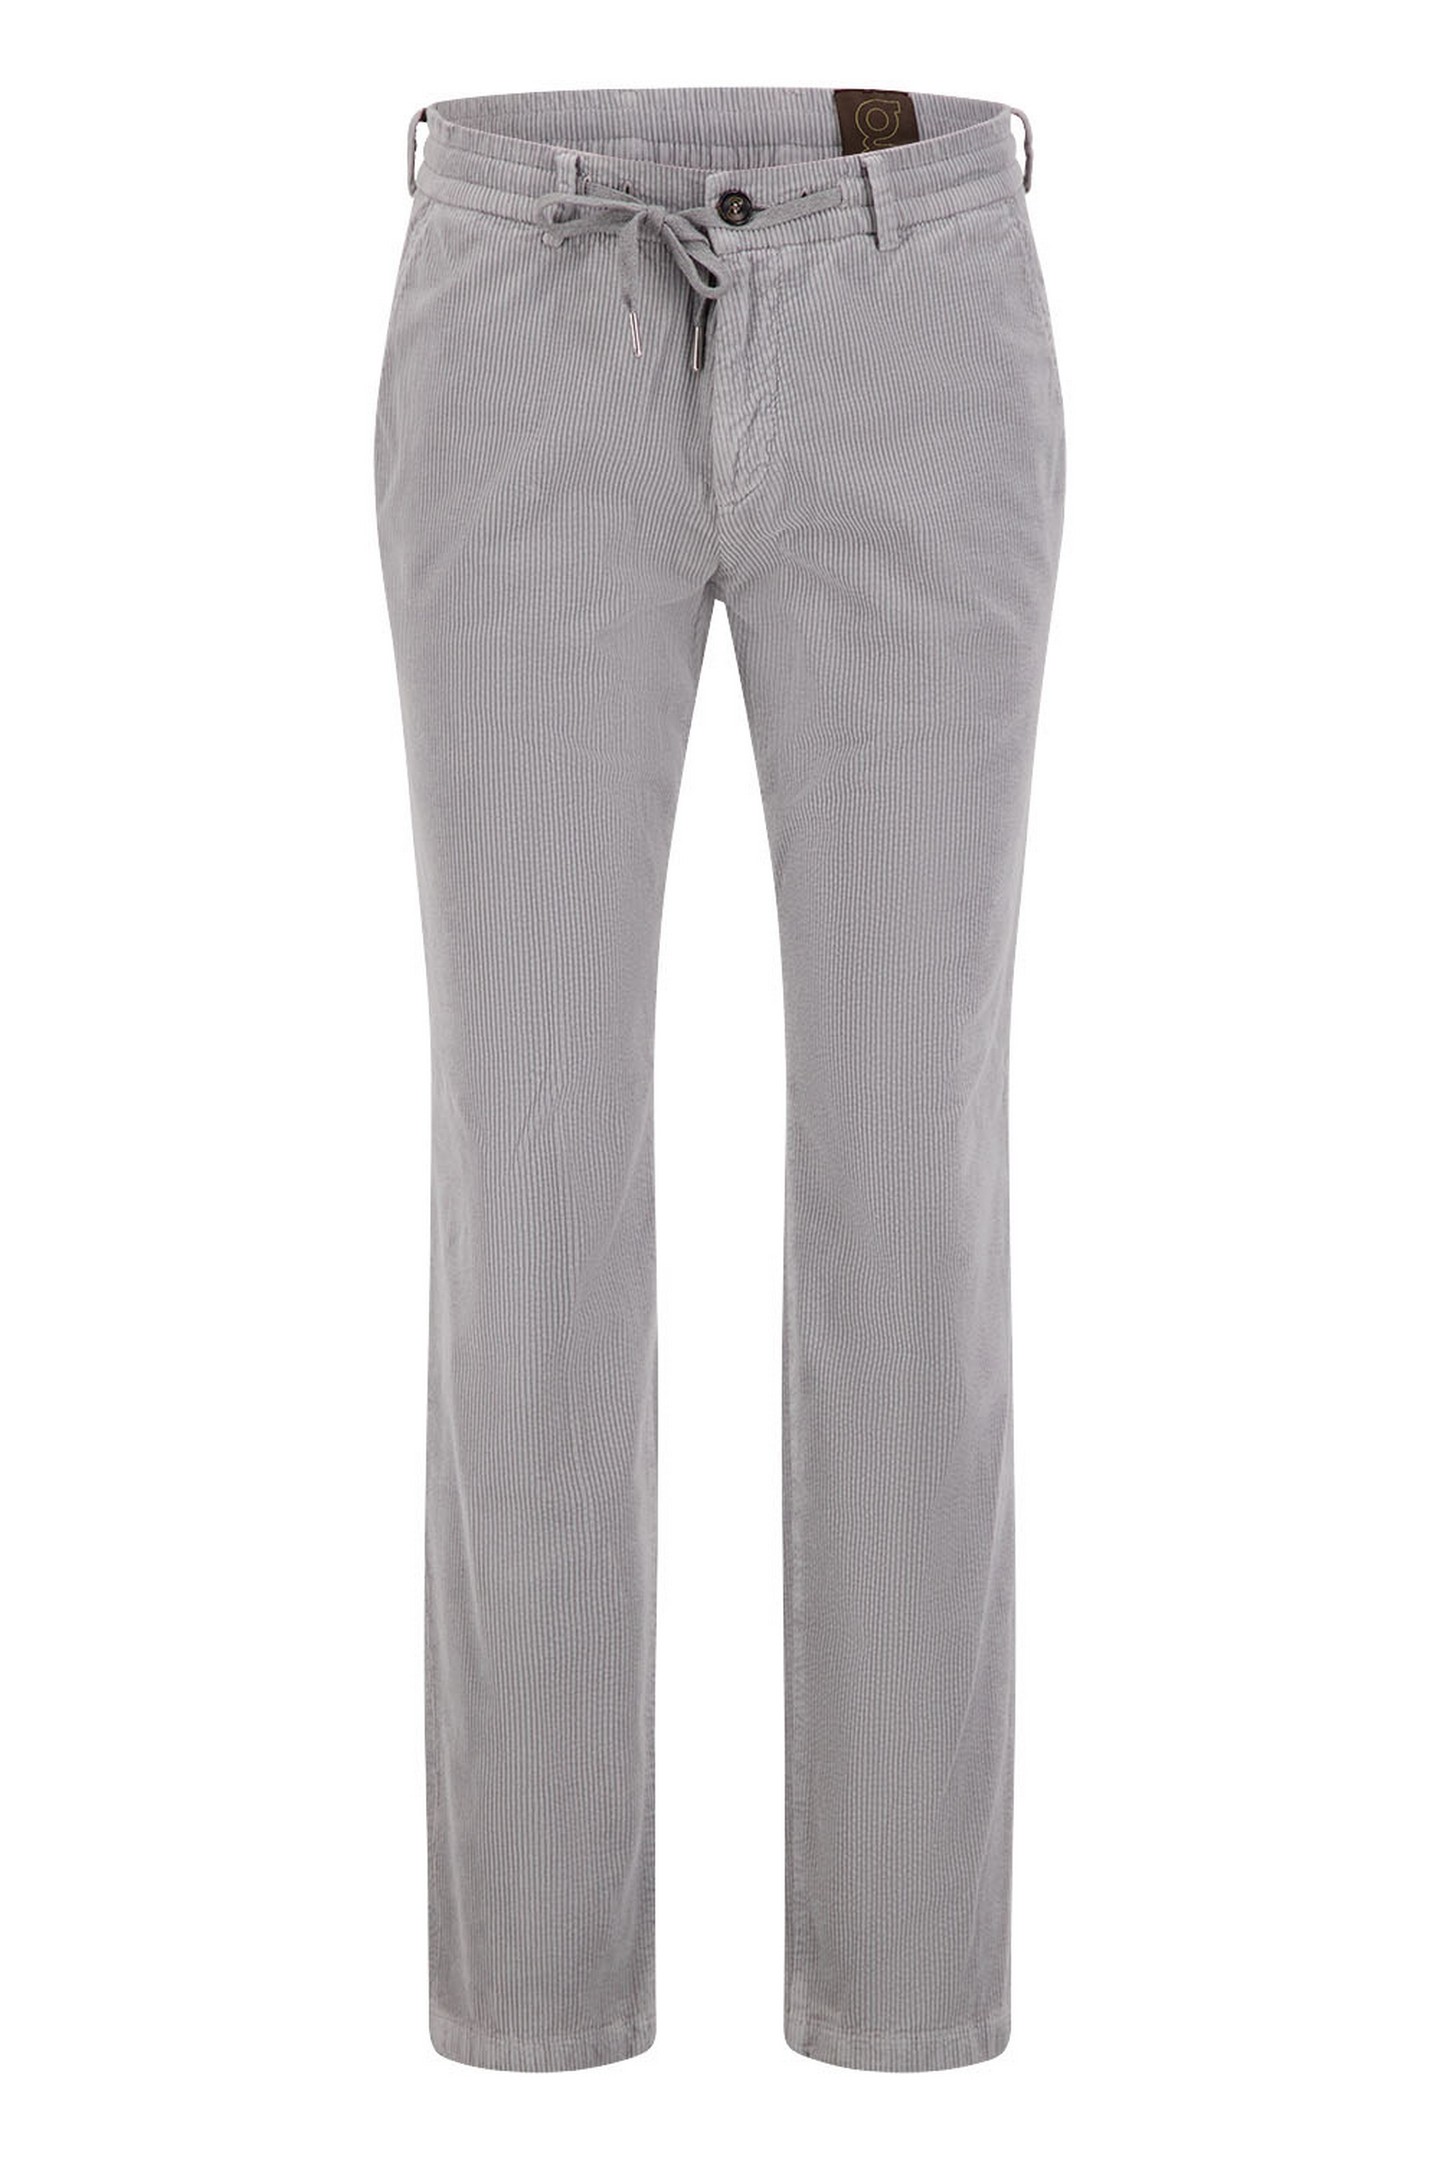 Harmont & Blaine Men's Casual Grey Corduroy Trousers Size 50 Narrow Fit  WNC300 | eBay